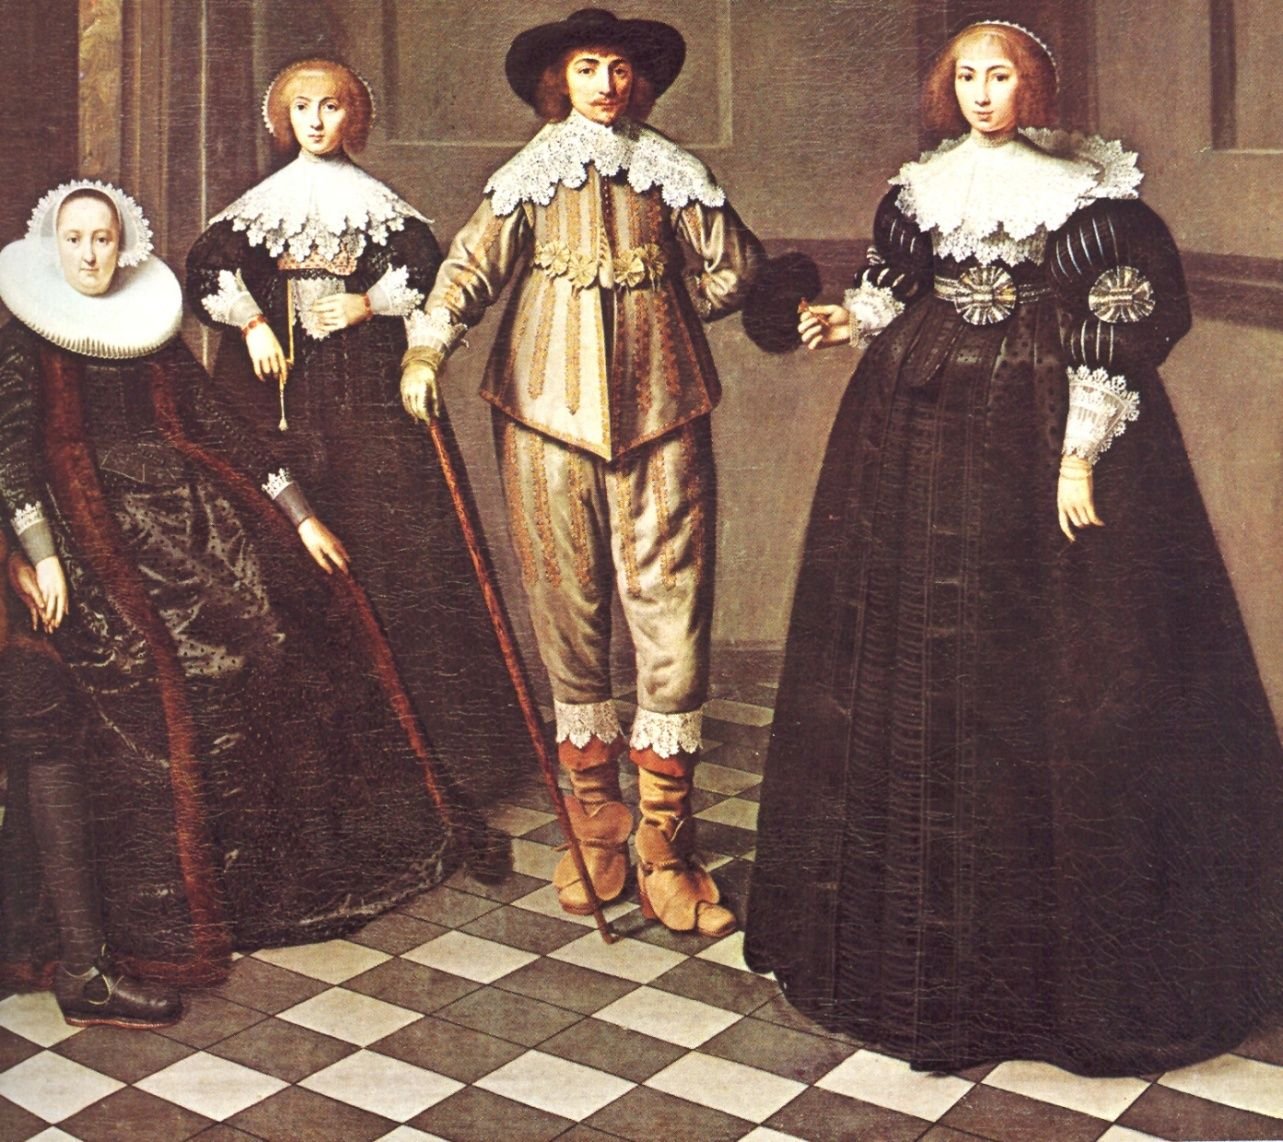 17 century. Эпоха Якоба мода в Англии. Эпоха Барокко 17 век одежда. Эпоха Барокко 17 век Франция одежда. Костюм эпохи Барокко 17 век.